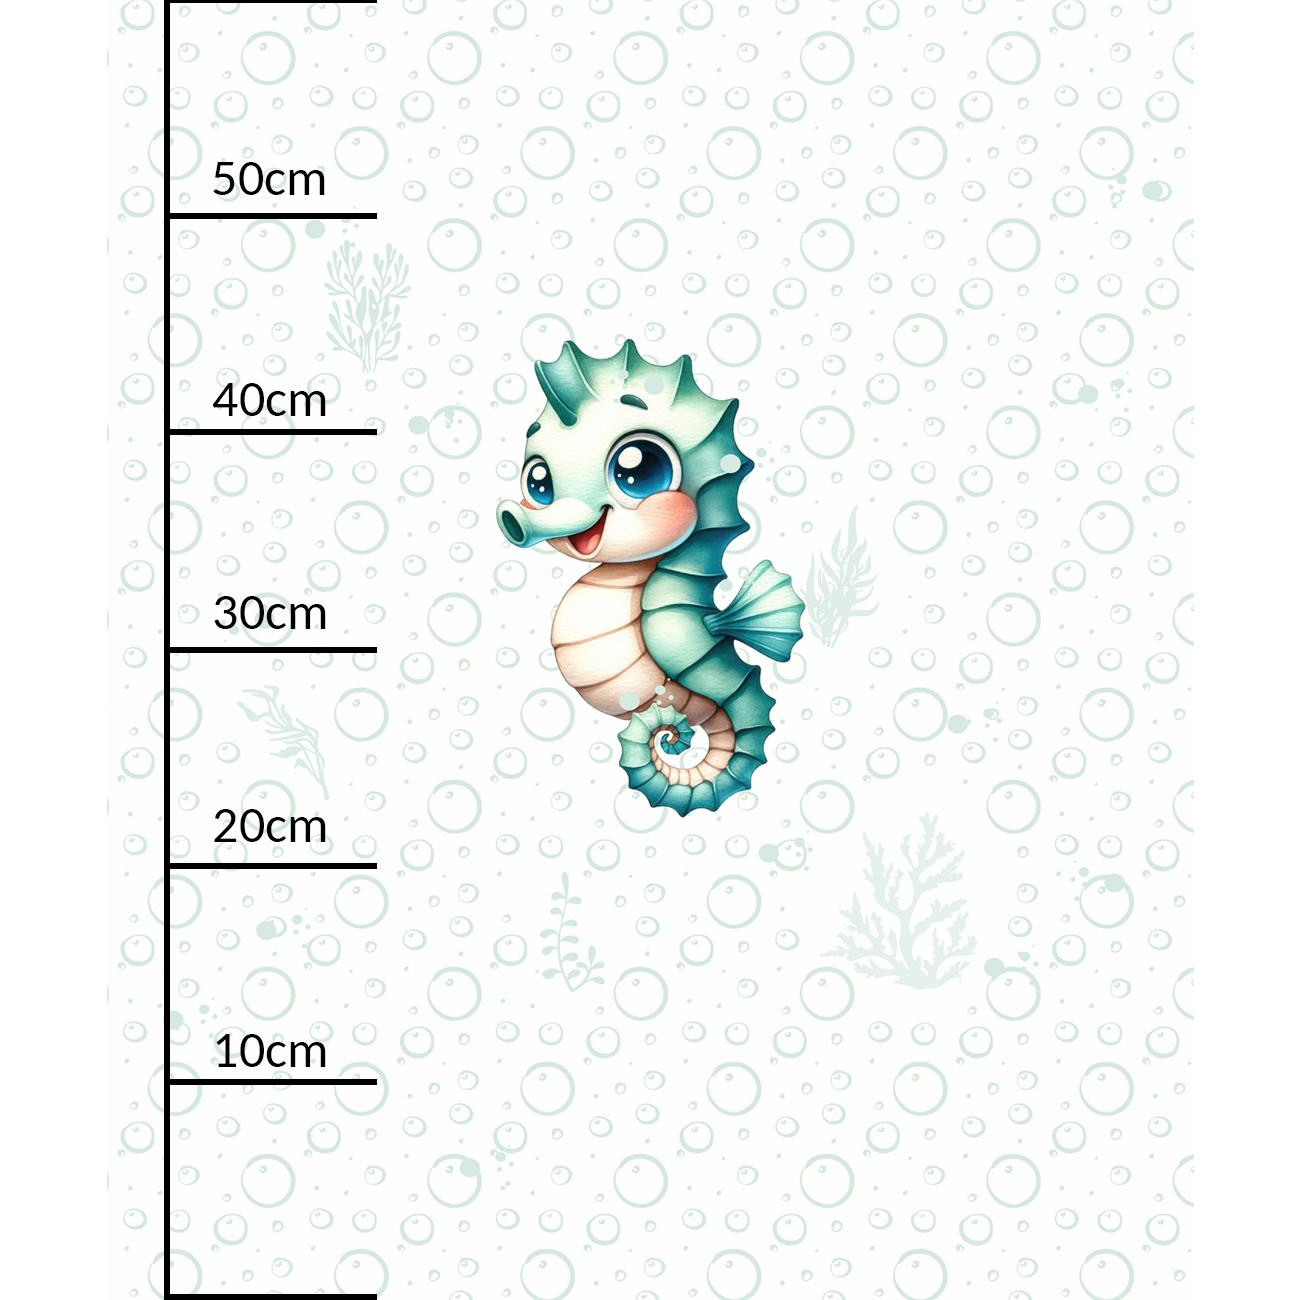 SEAHORSE (SEA ANIMALS WZ. 2) - PANEL (60cm x 50cm) SINGLE JERSEY